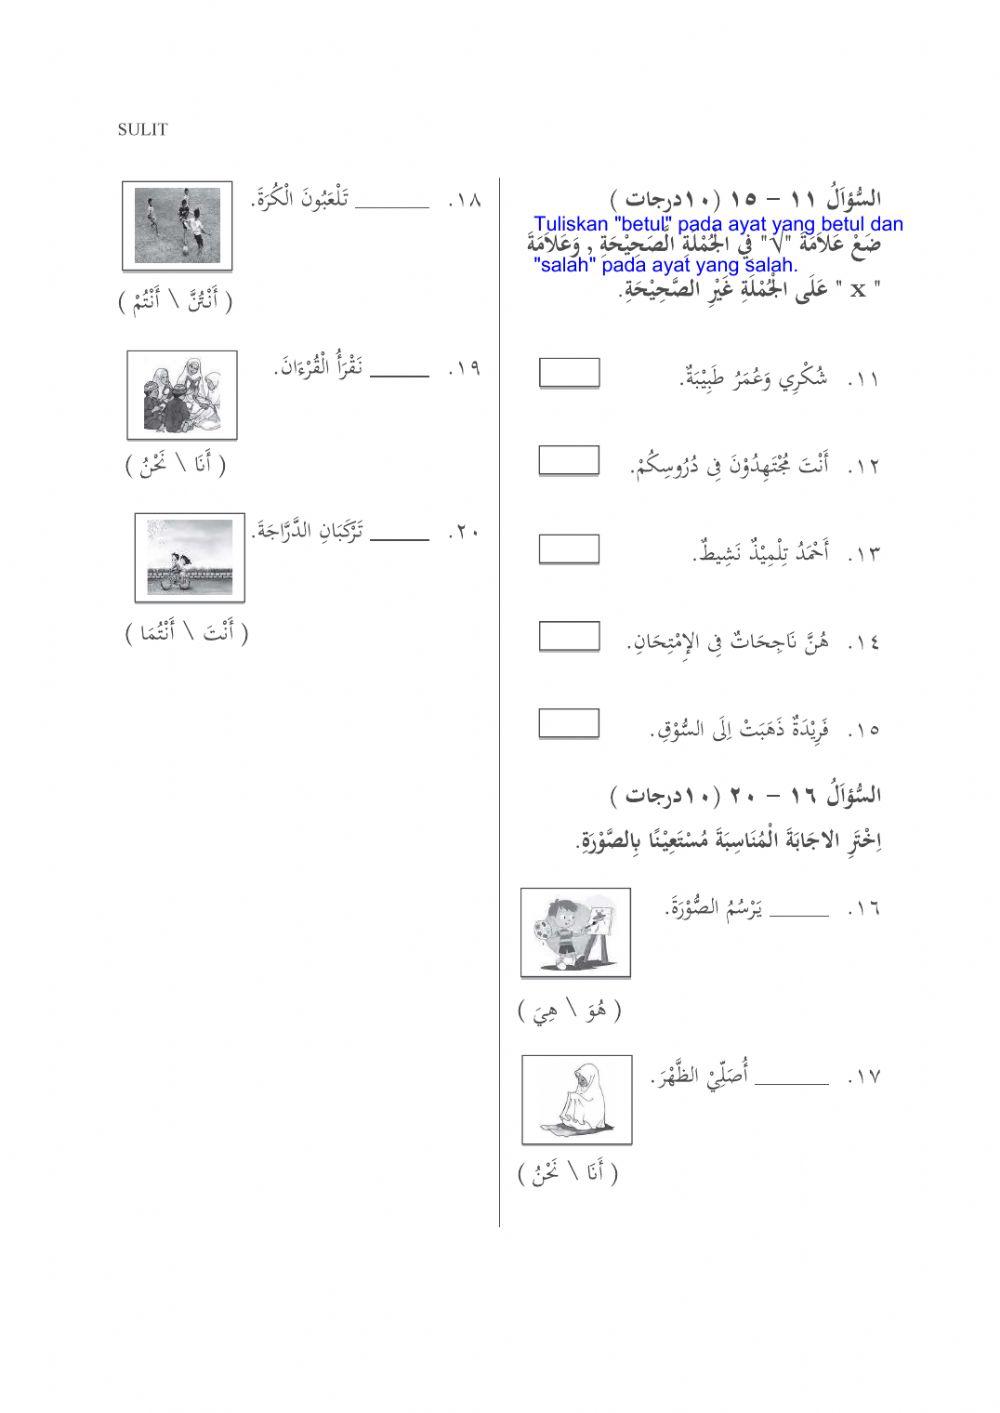 Latihan Pengukuhan Bahasa Arab UPKK 2